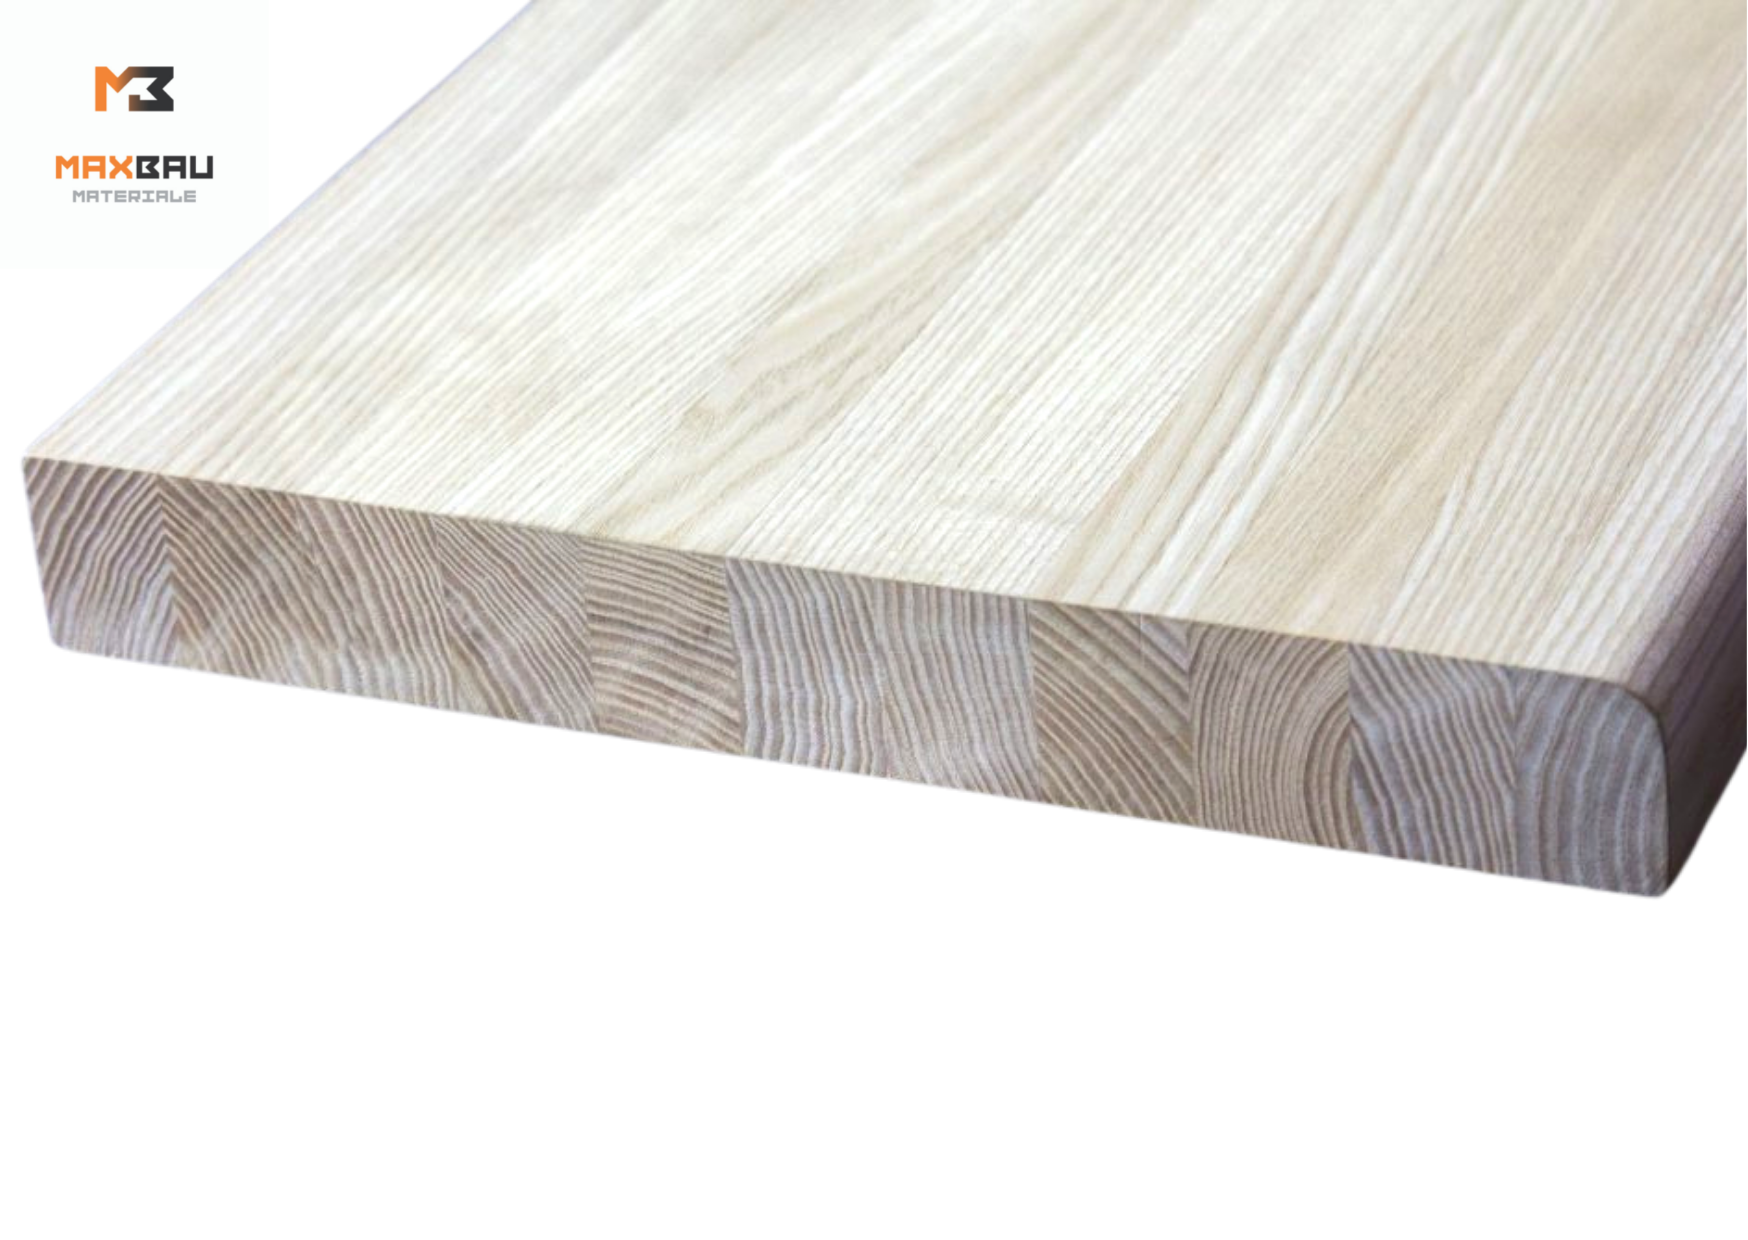 Placi din lemn incleiat - Placa de lemn incleiat MaxBau 800 x 200 x 28 mm Clasa AB, maxbau.ro